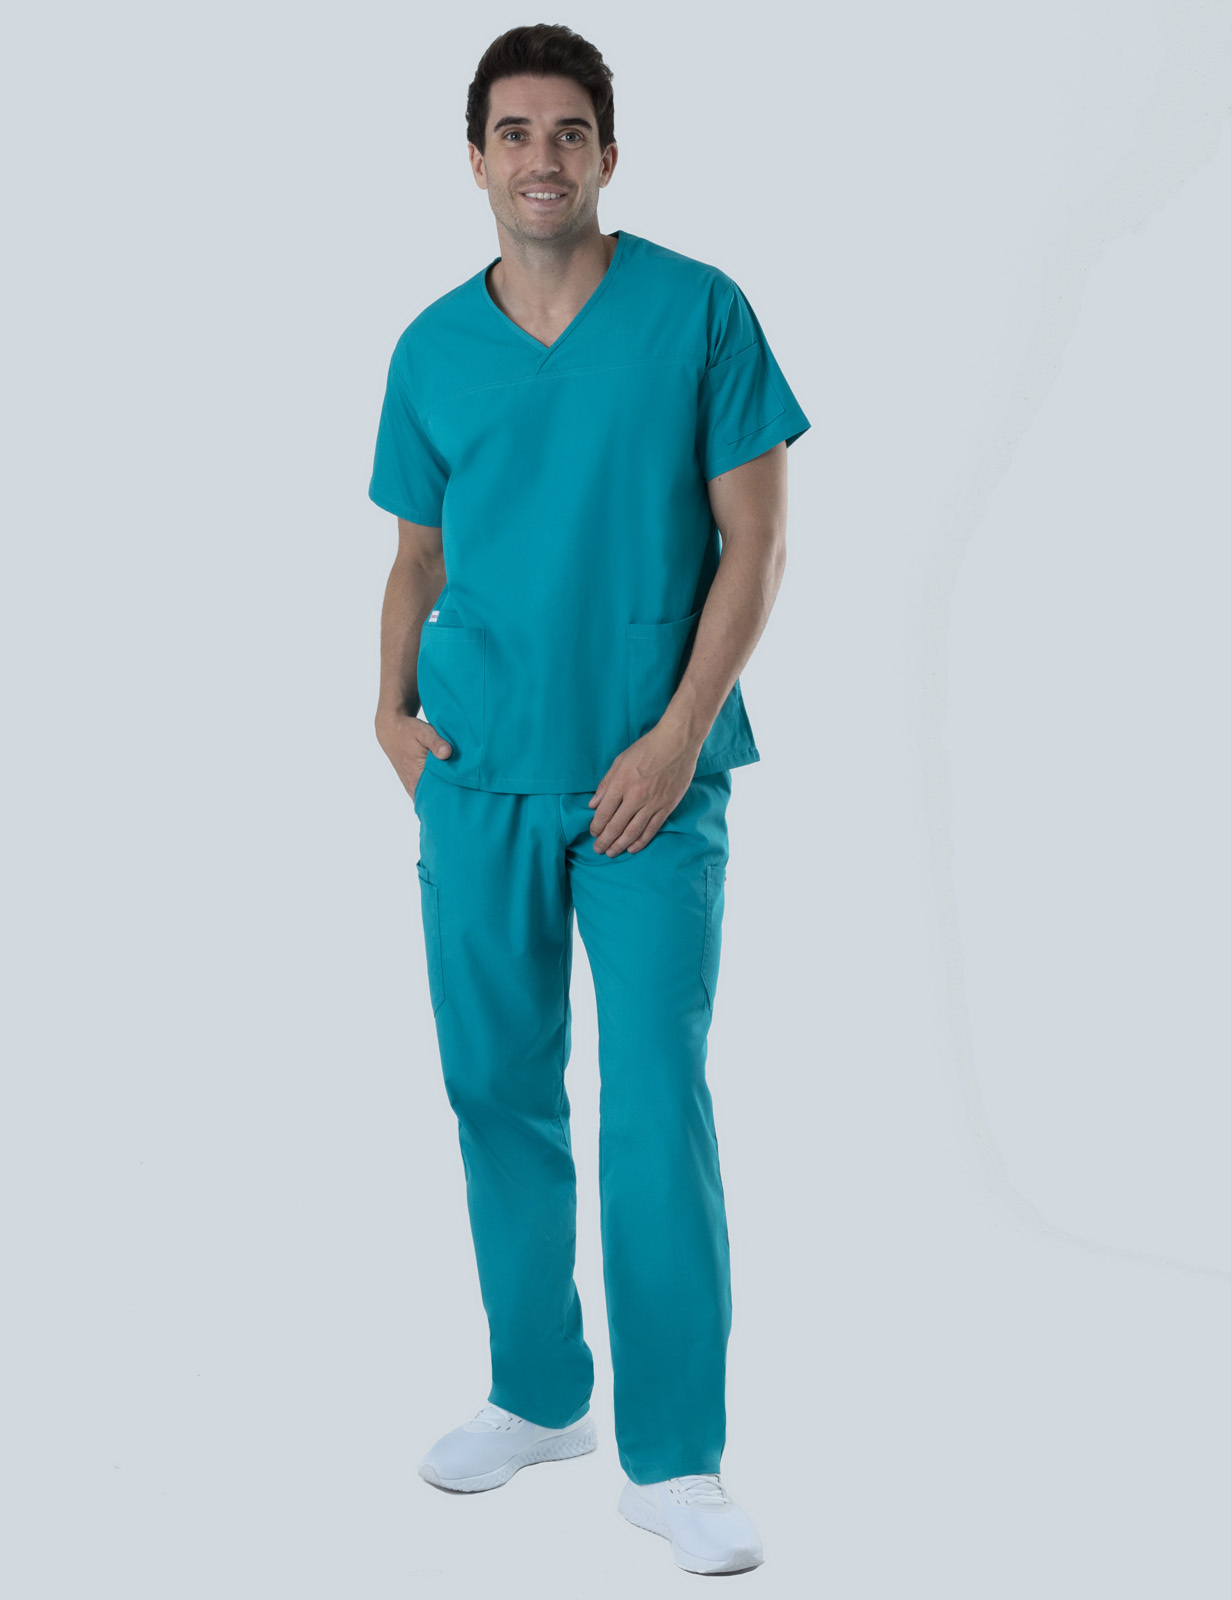 ECT Assistant in Nursing Uniform Set Bundle (Men's Fit Solid Top and Cargo Pants in Teal + Logos)